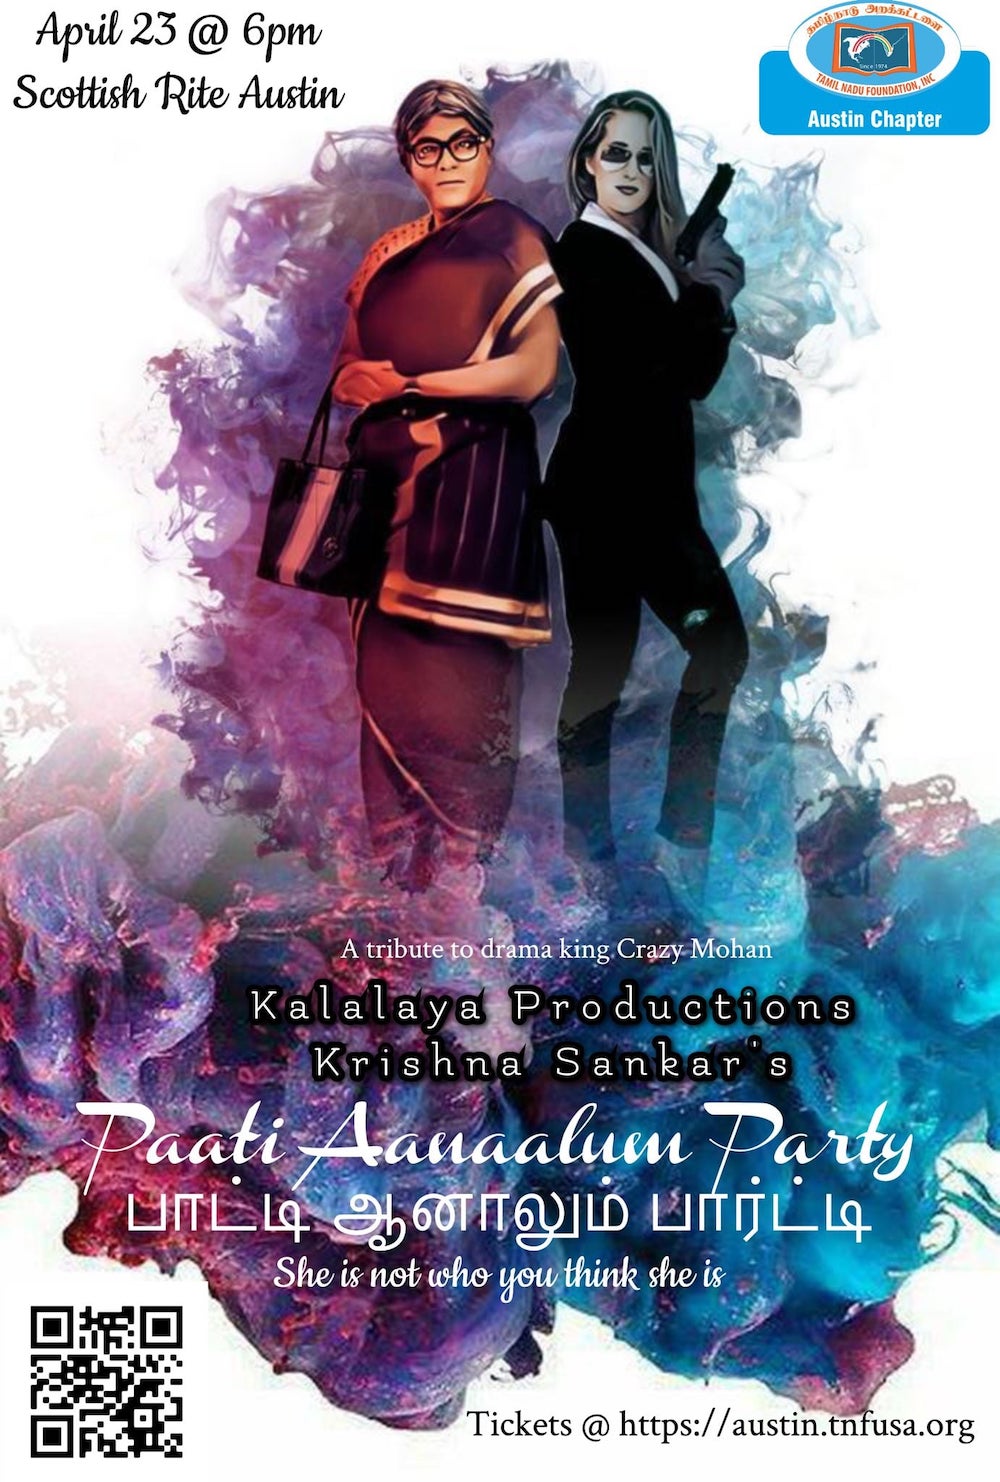 Paati Alanaaluen Party by Kalalaya Productions